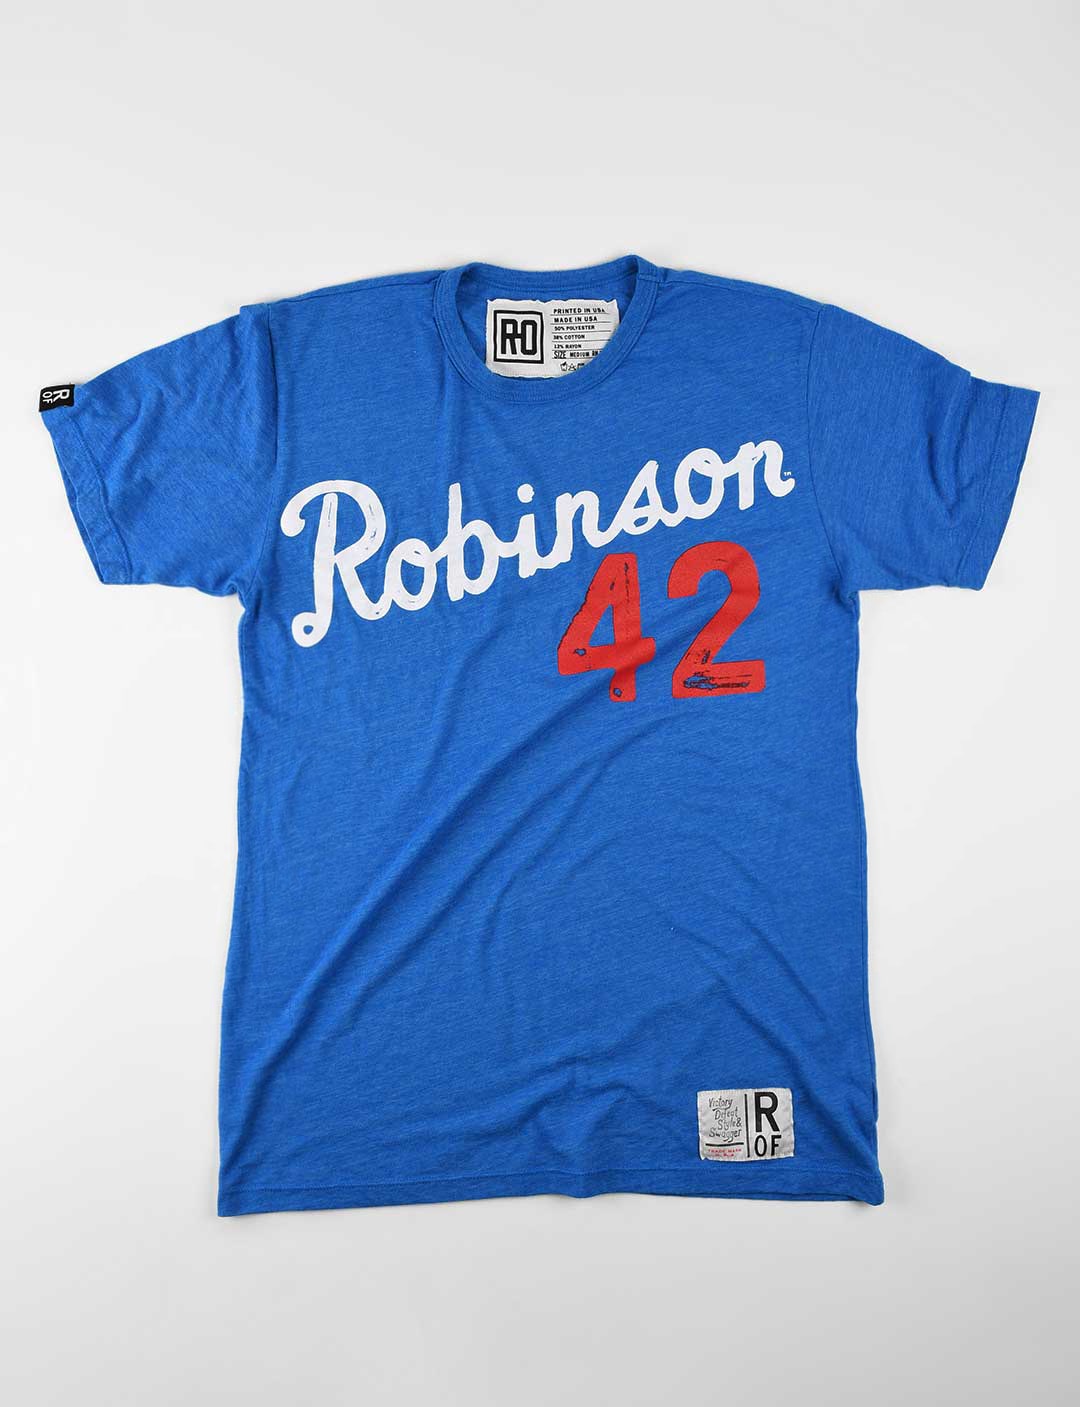 42 jackie robinson shirt